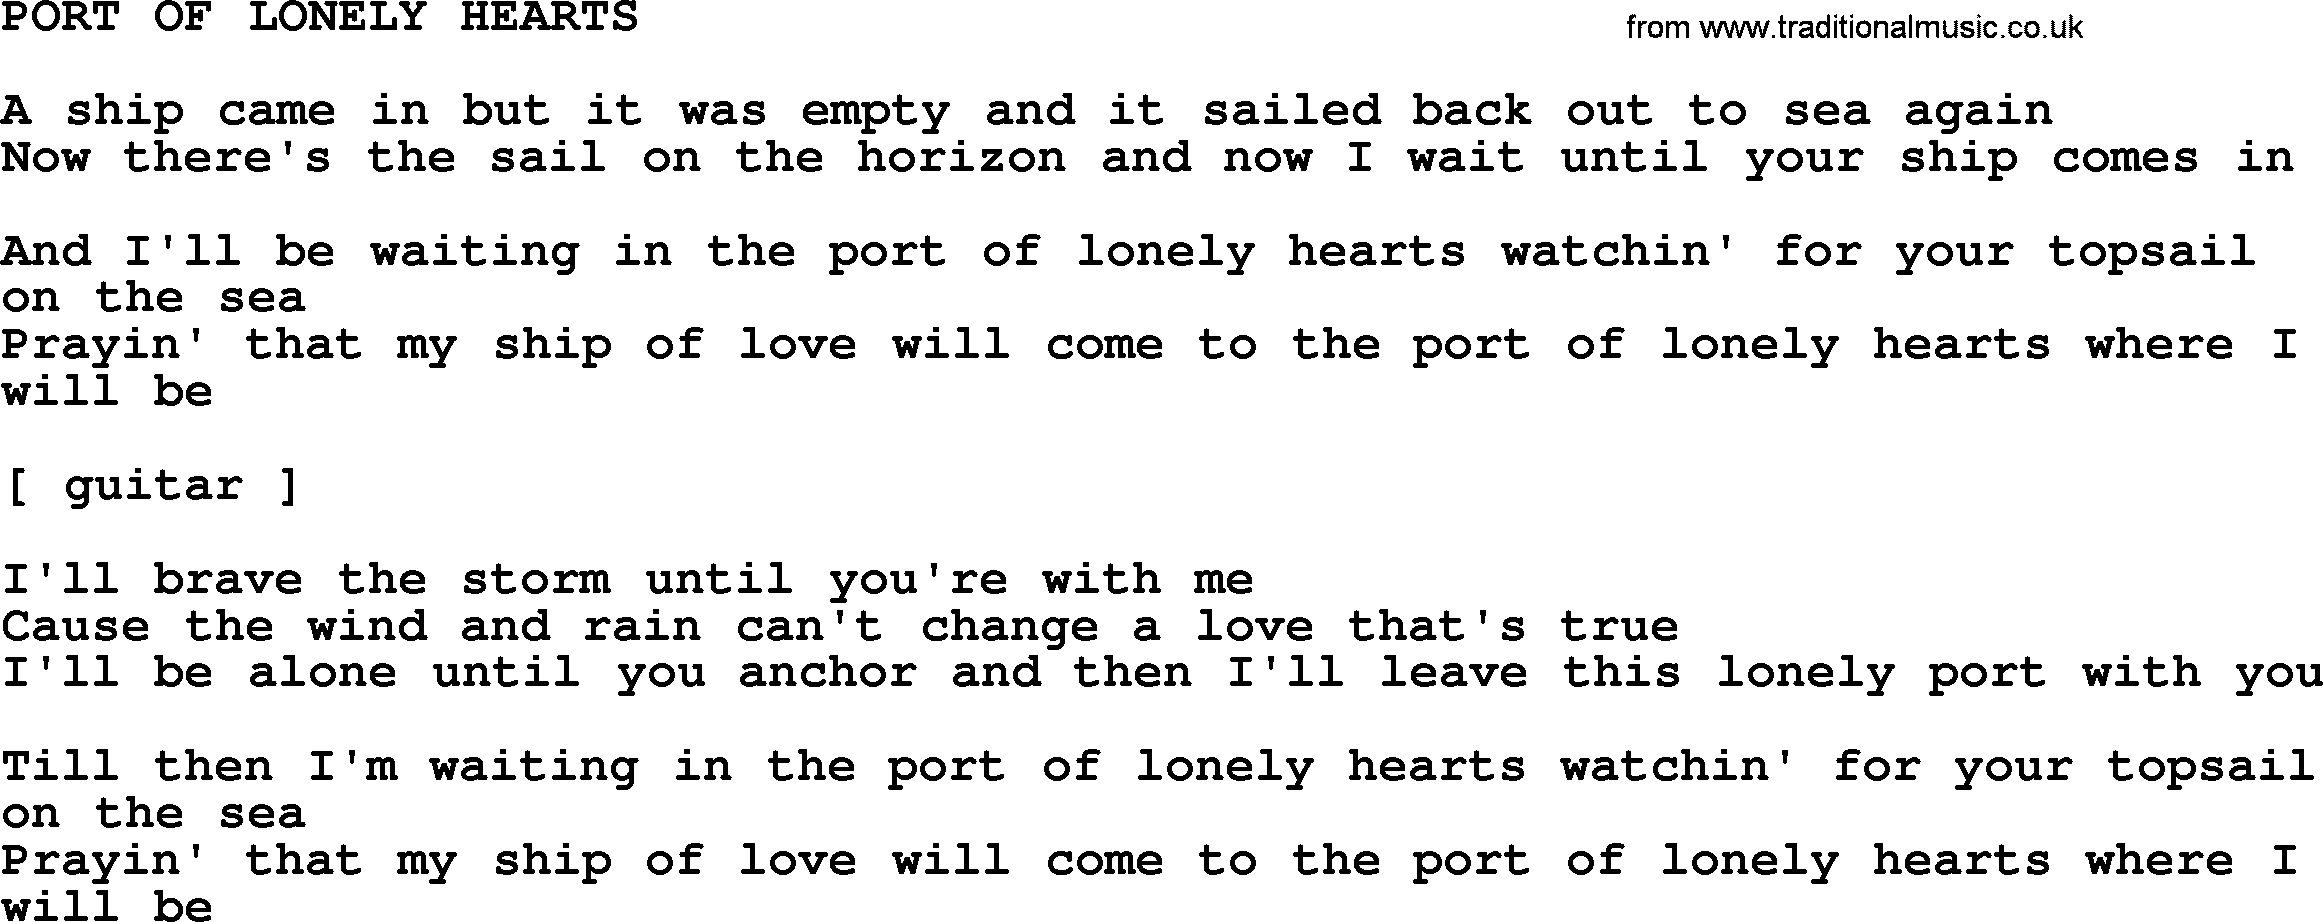 Johnny Cash song Port Of Lonely Hearts.txt lyrics